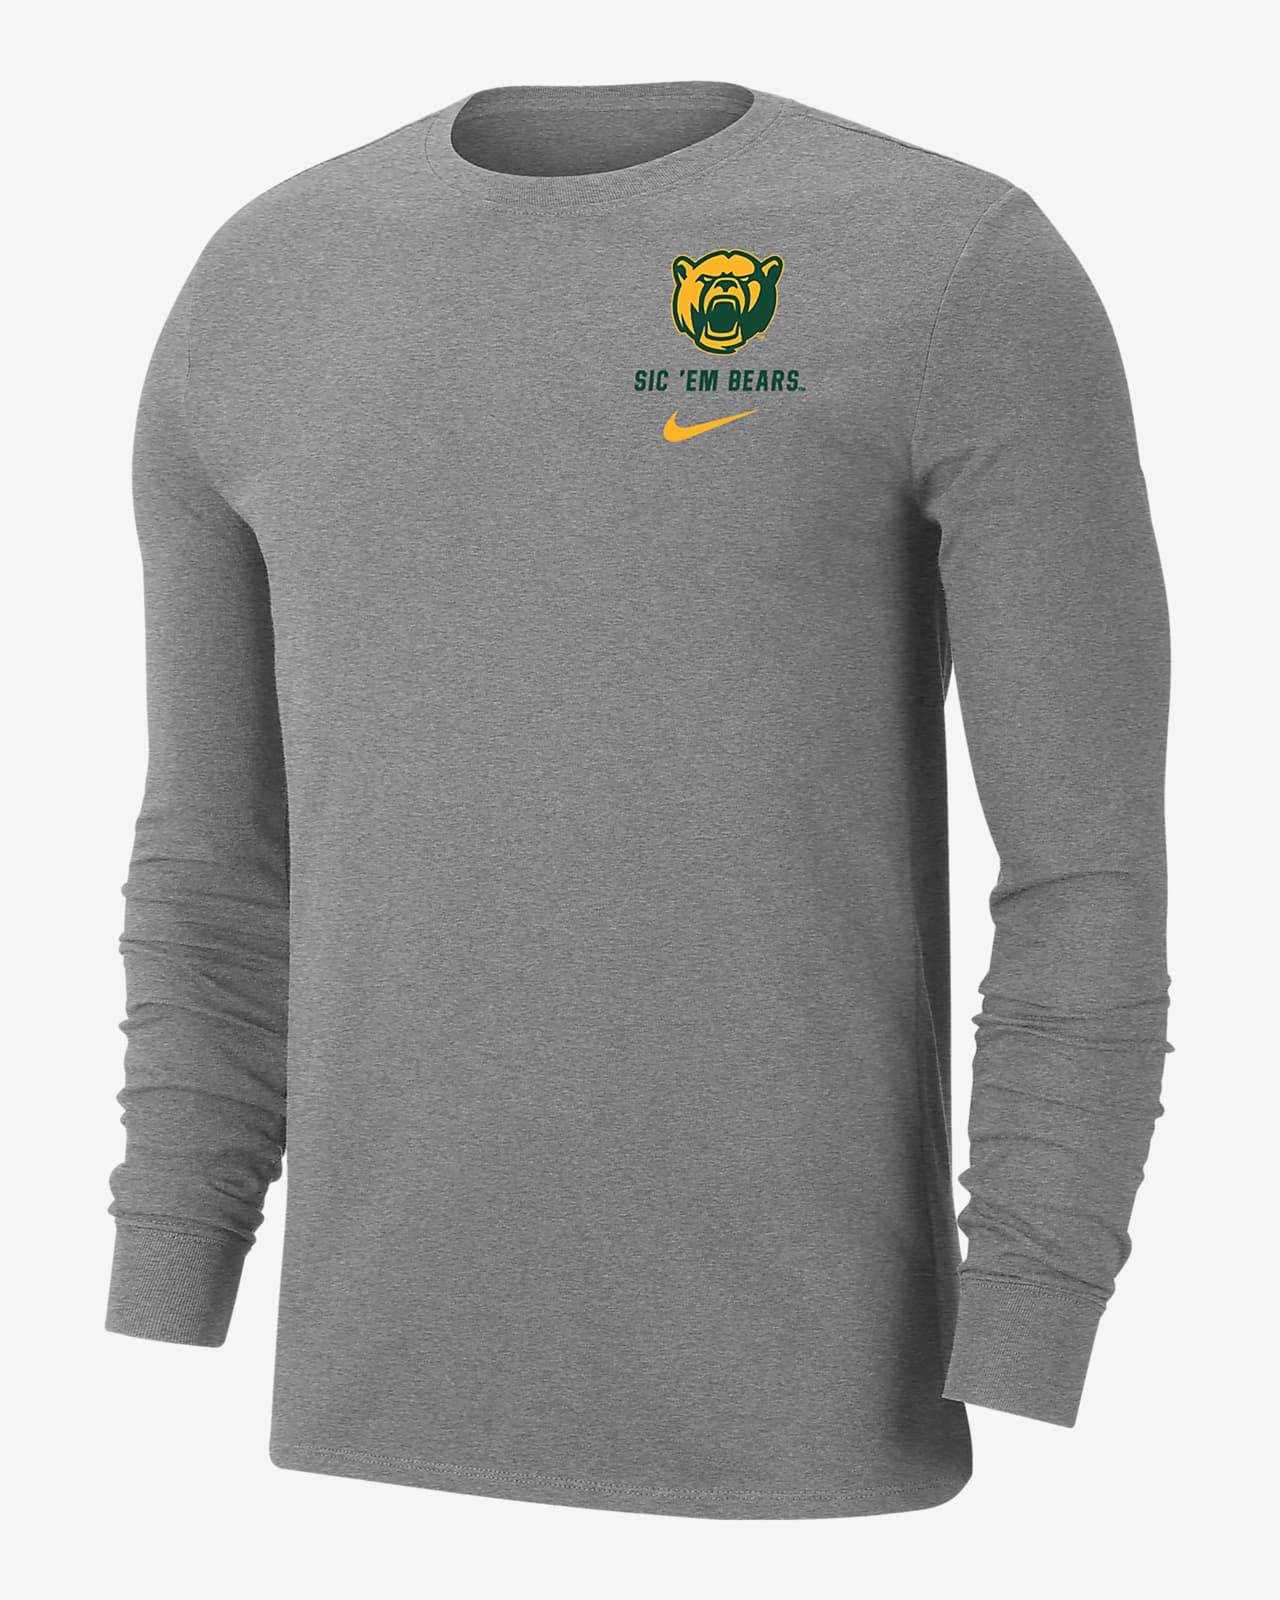 Nike College Dri-FIT (Baylor) Men's Long-Sleeve T-Shirt